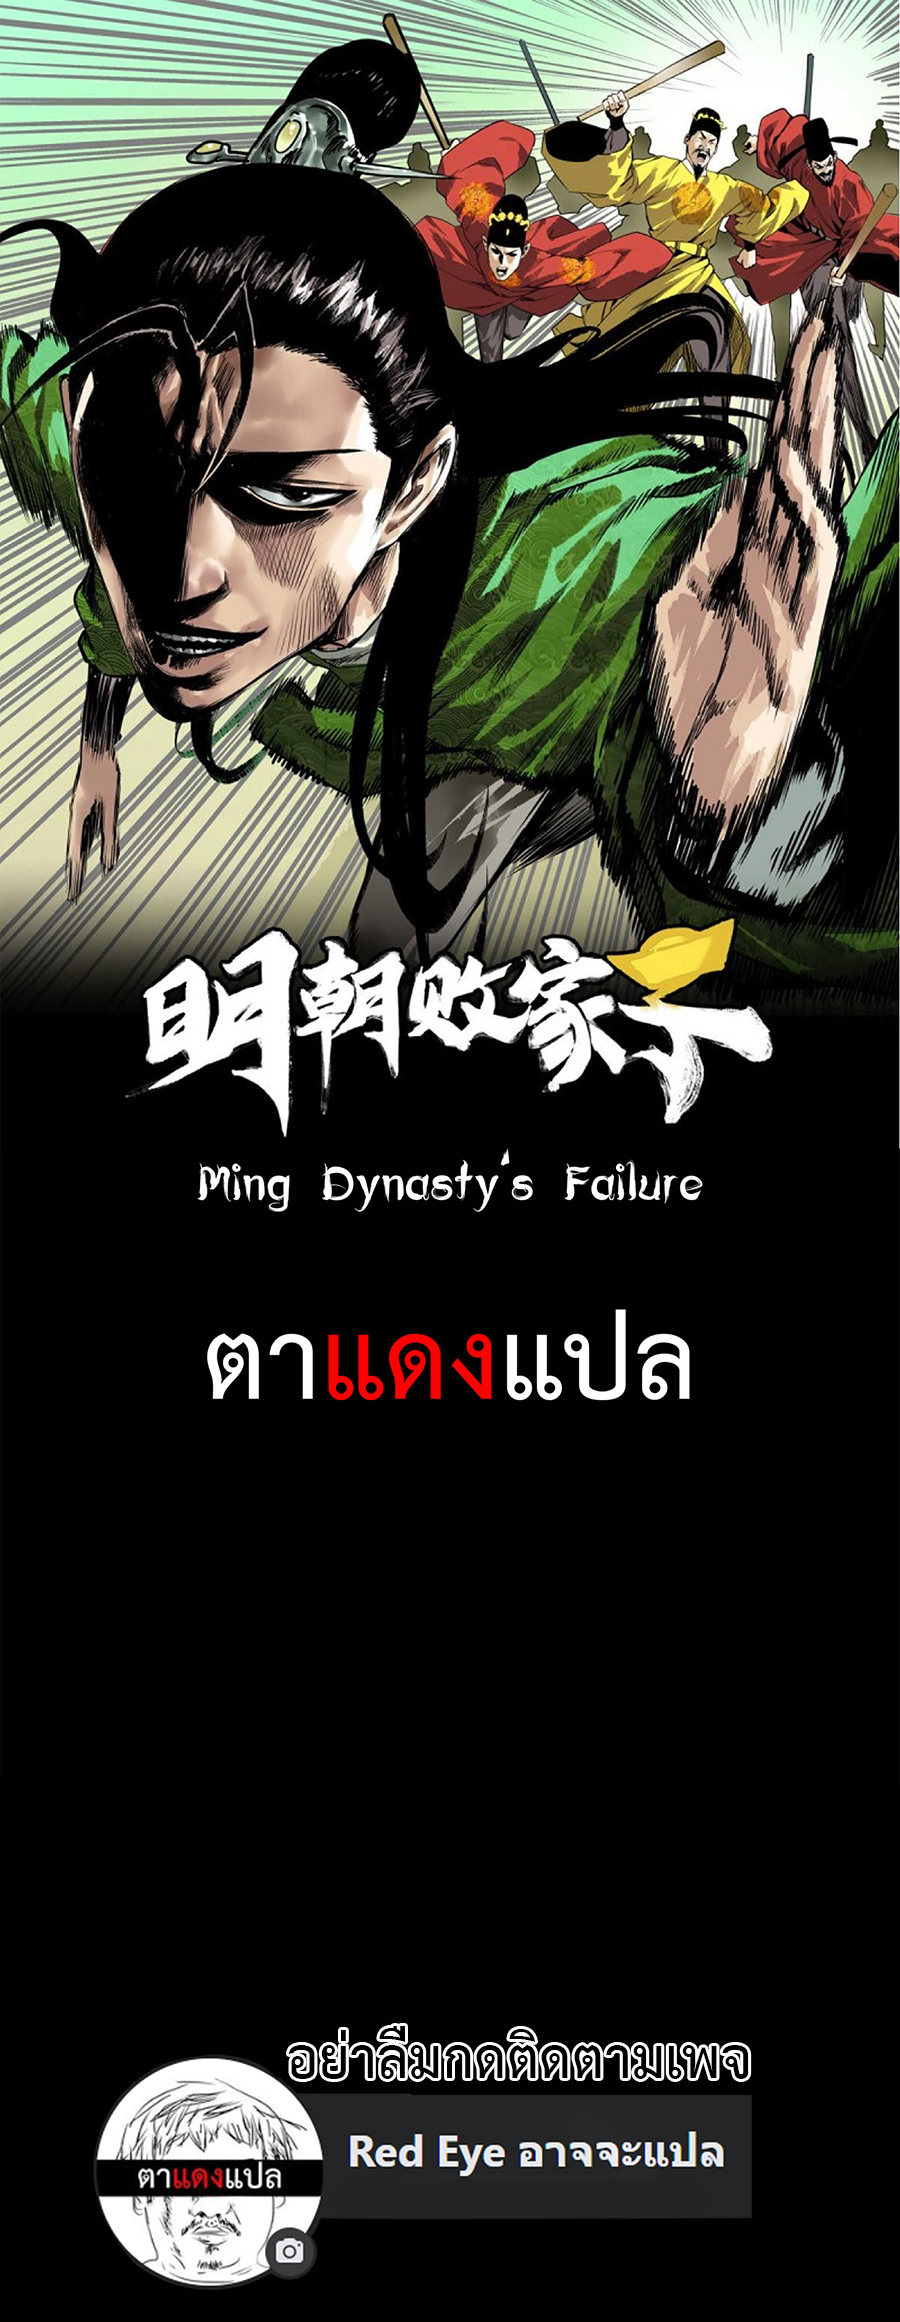 Ming Dynasty's Failure 40 (1)